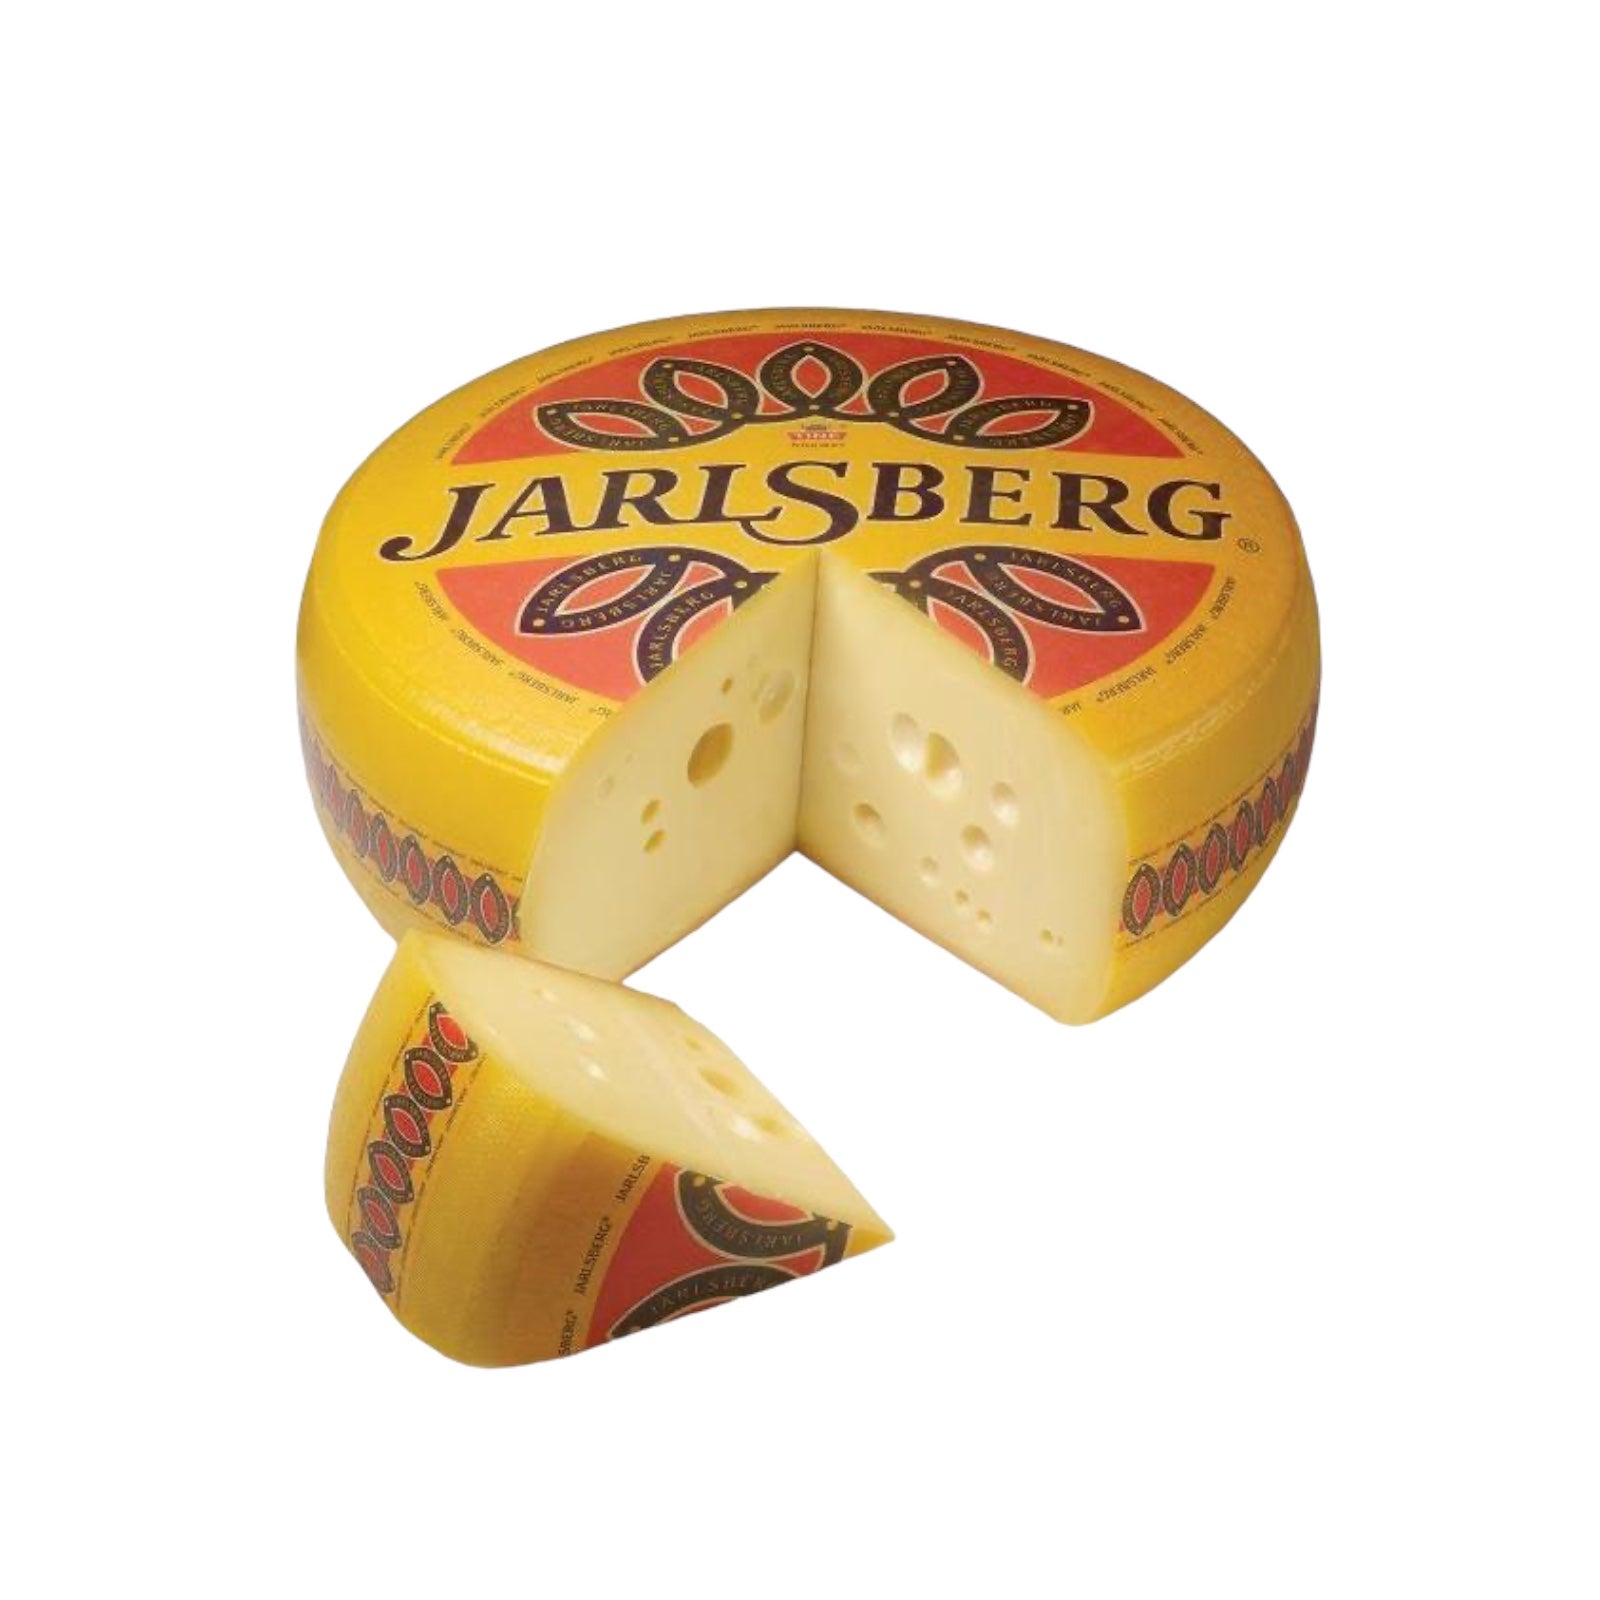 Jarlsberg Cheese Aprox. 1.20lb